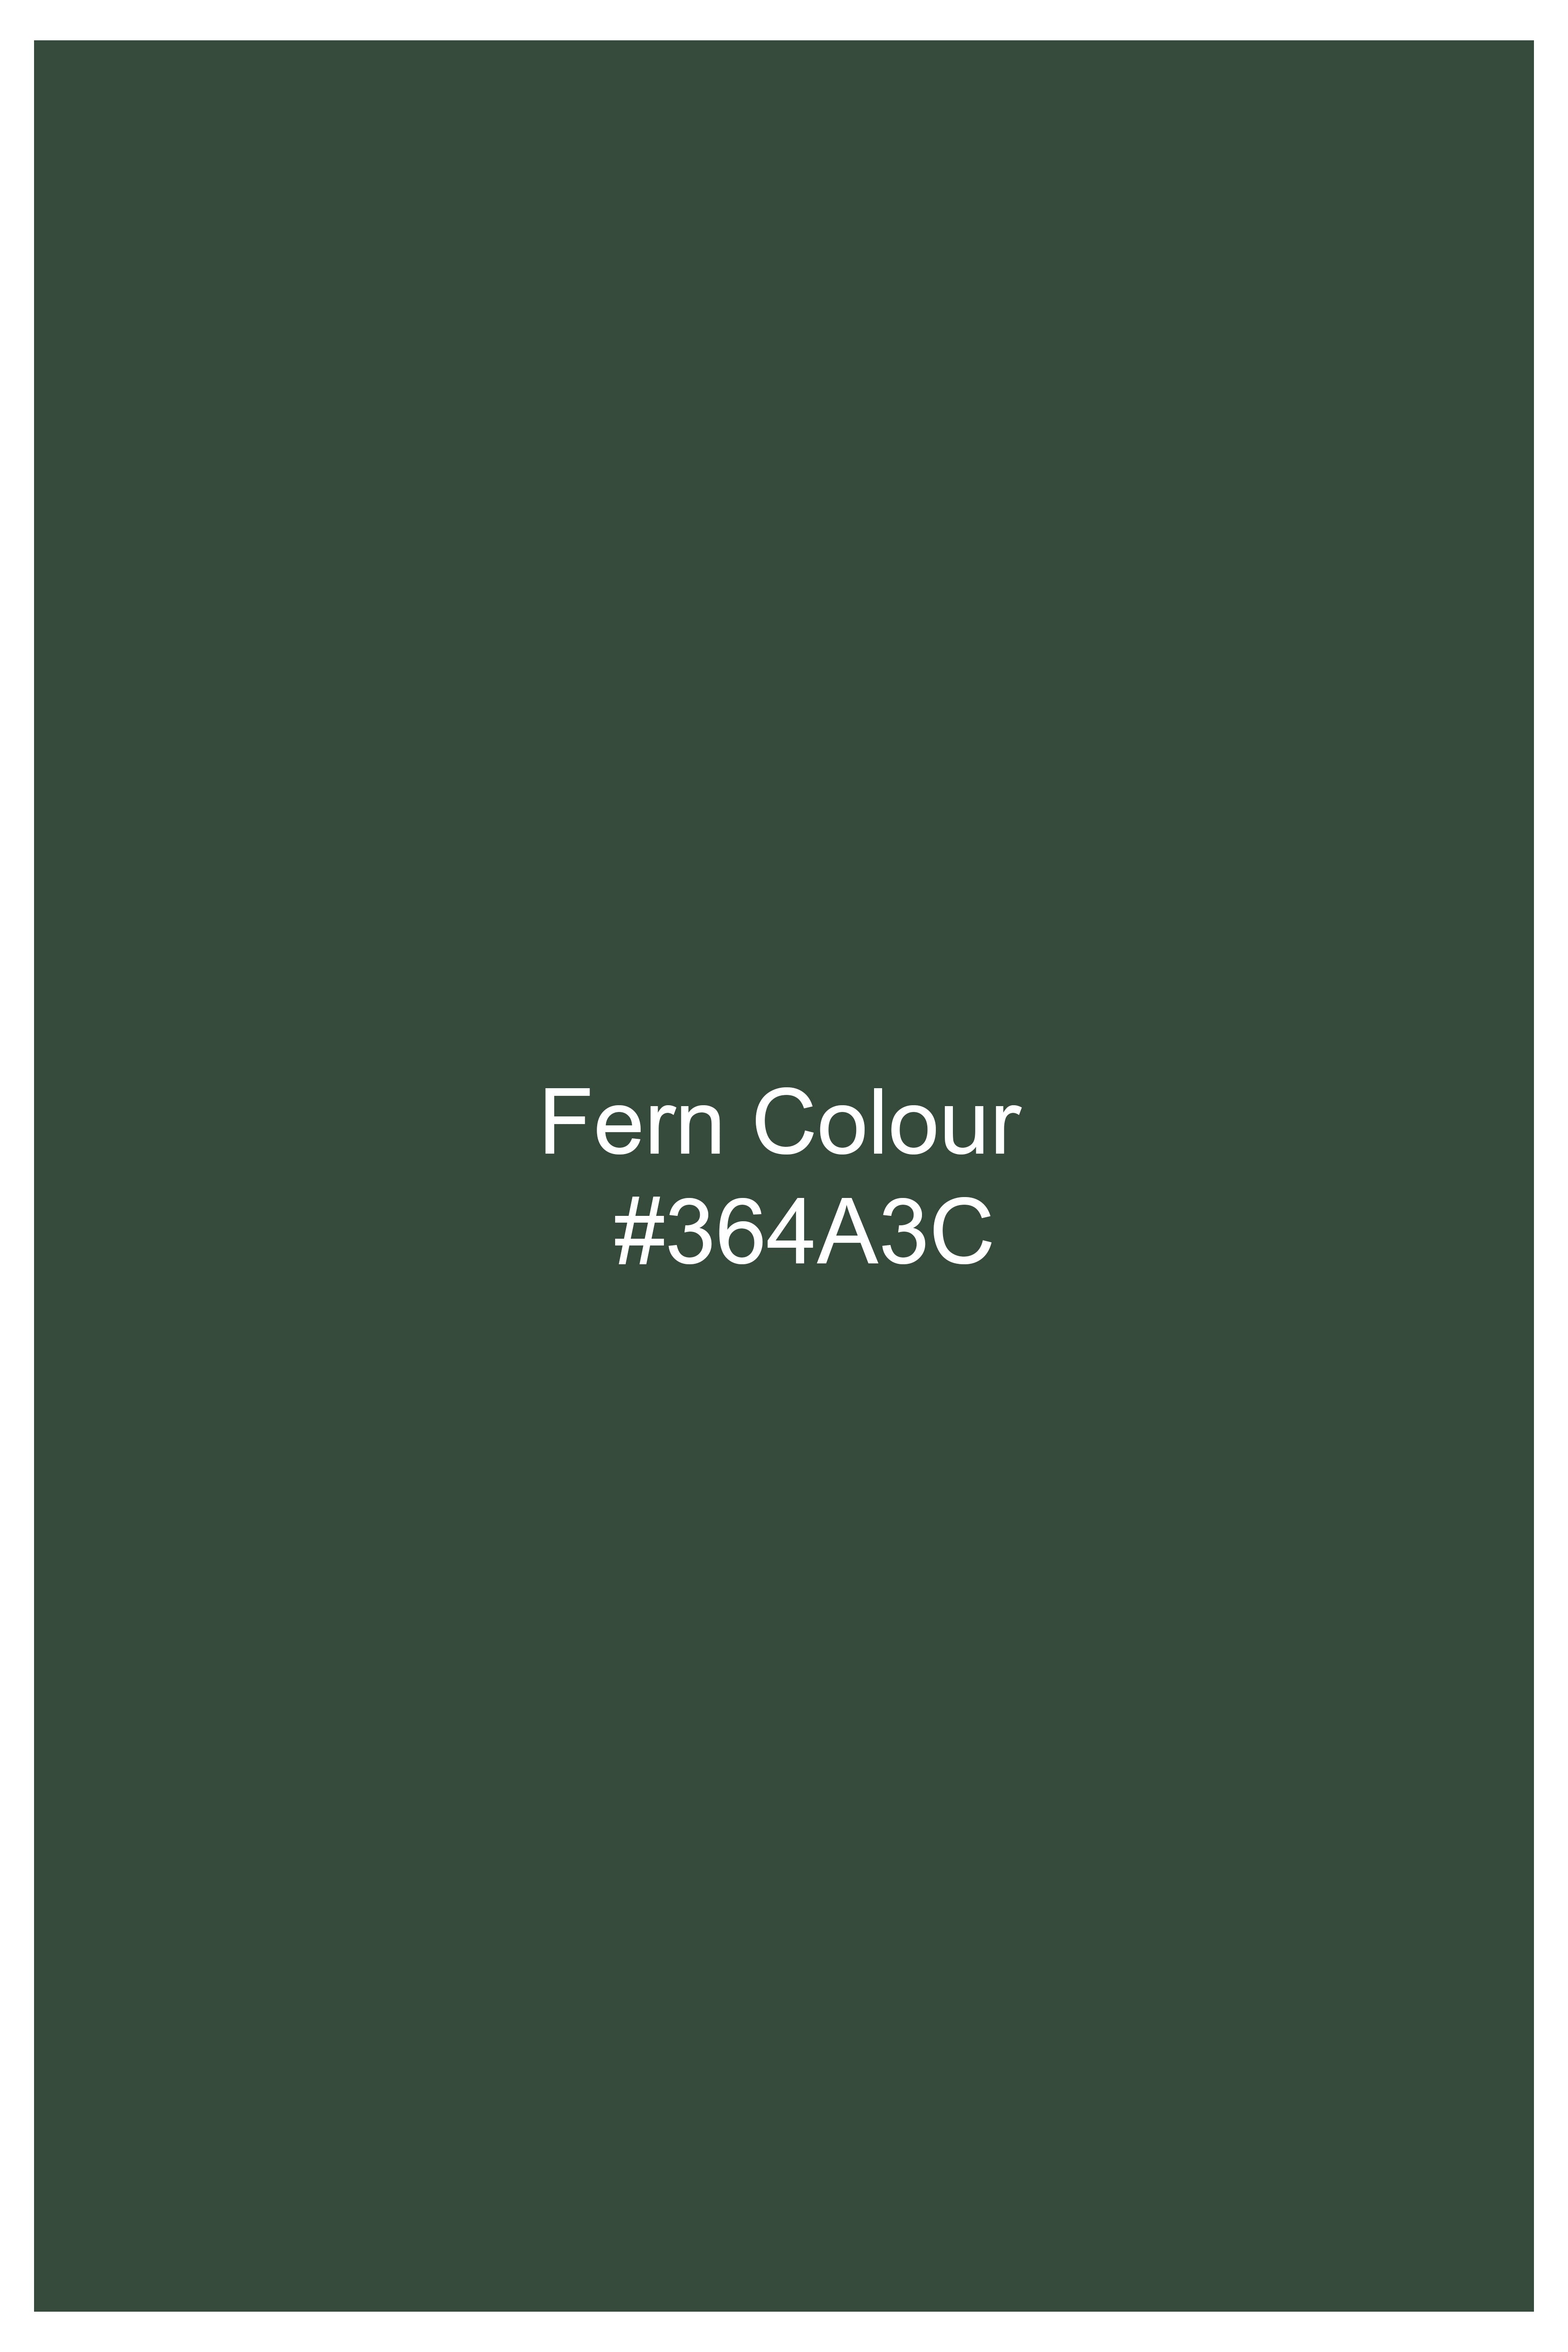 Fern Green Premium Cotton Waistcoat V2970-36, V2970-38, V2970-40, V2970-42, V2970-44, V2970-46, V2970-48, V2970-50, V2970-70, V2970-54, V2970-56, V2970-58, V2970-60